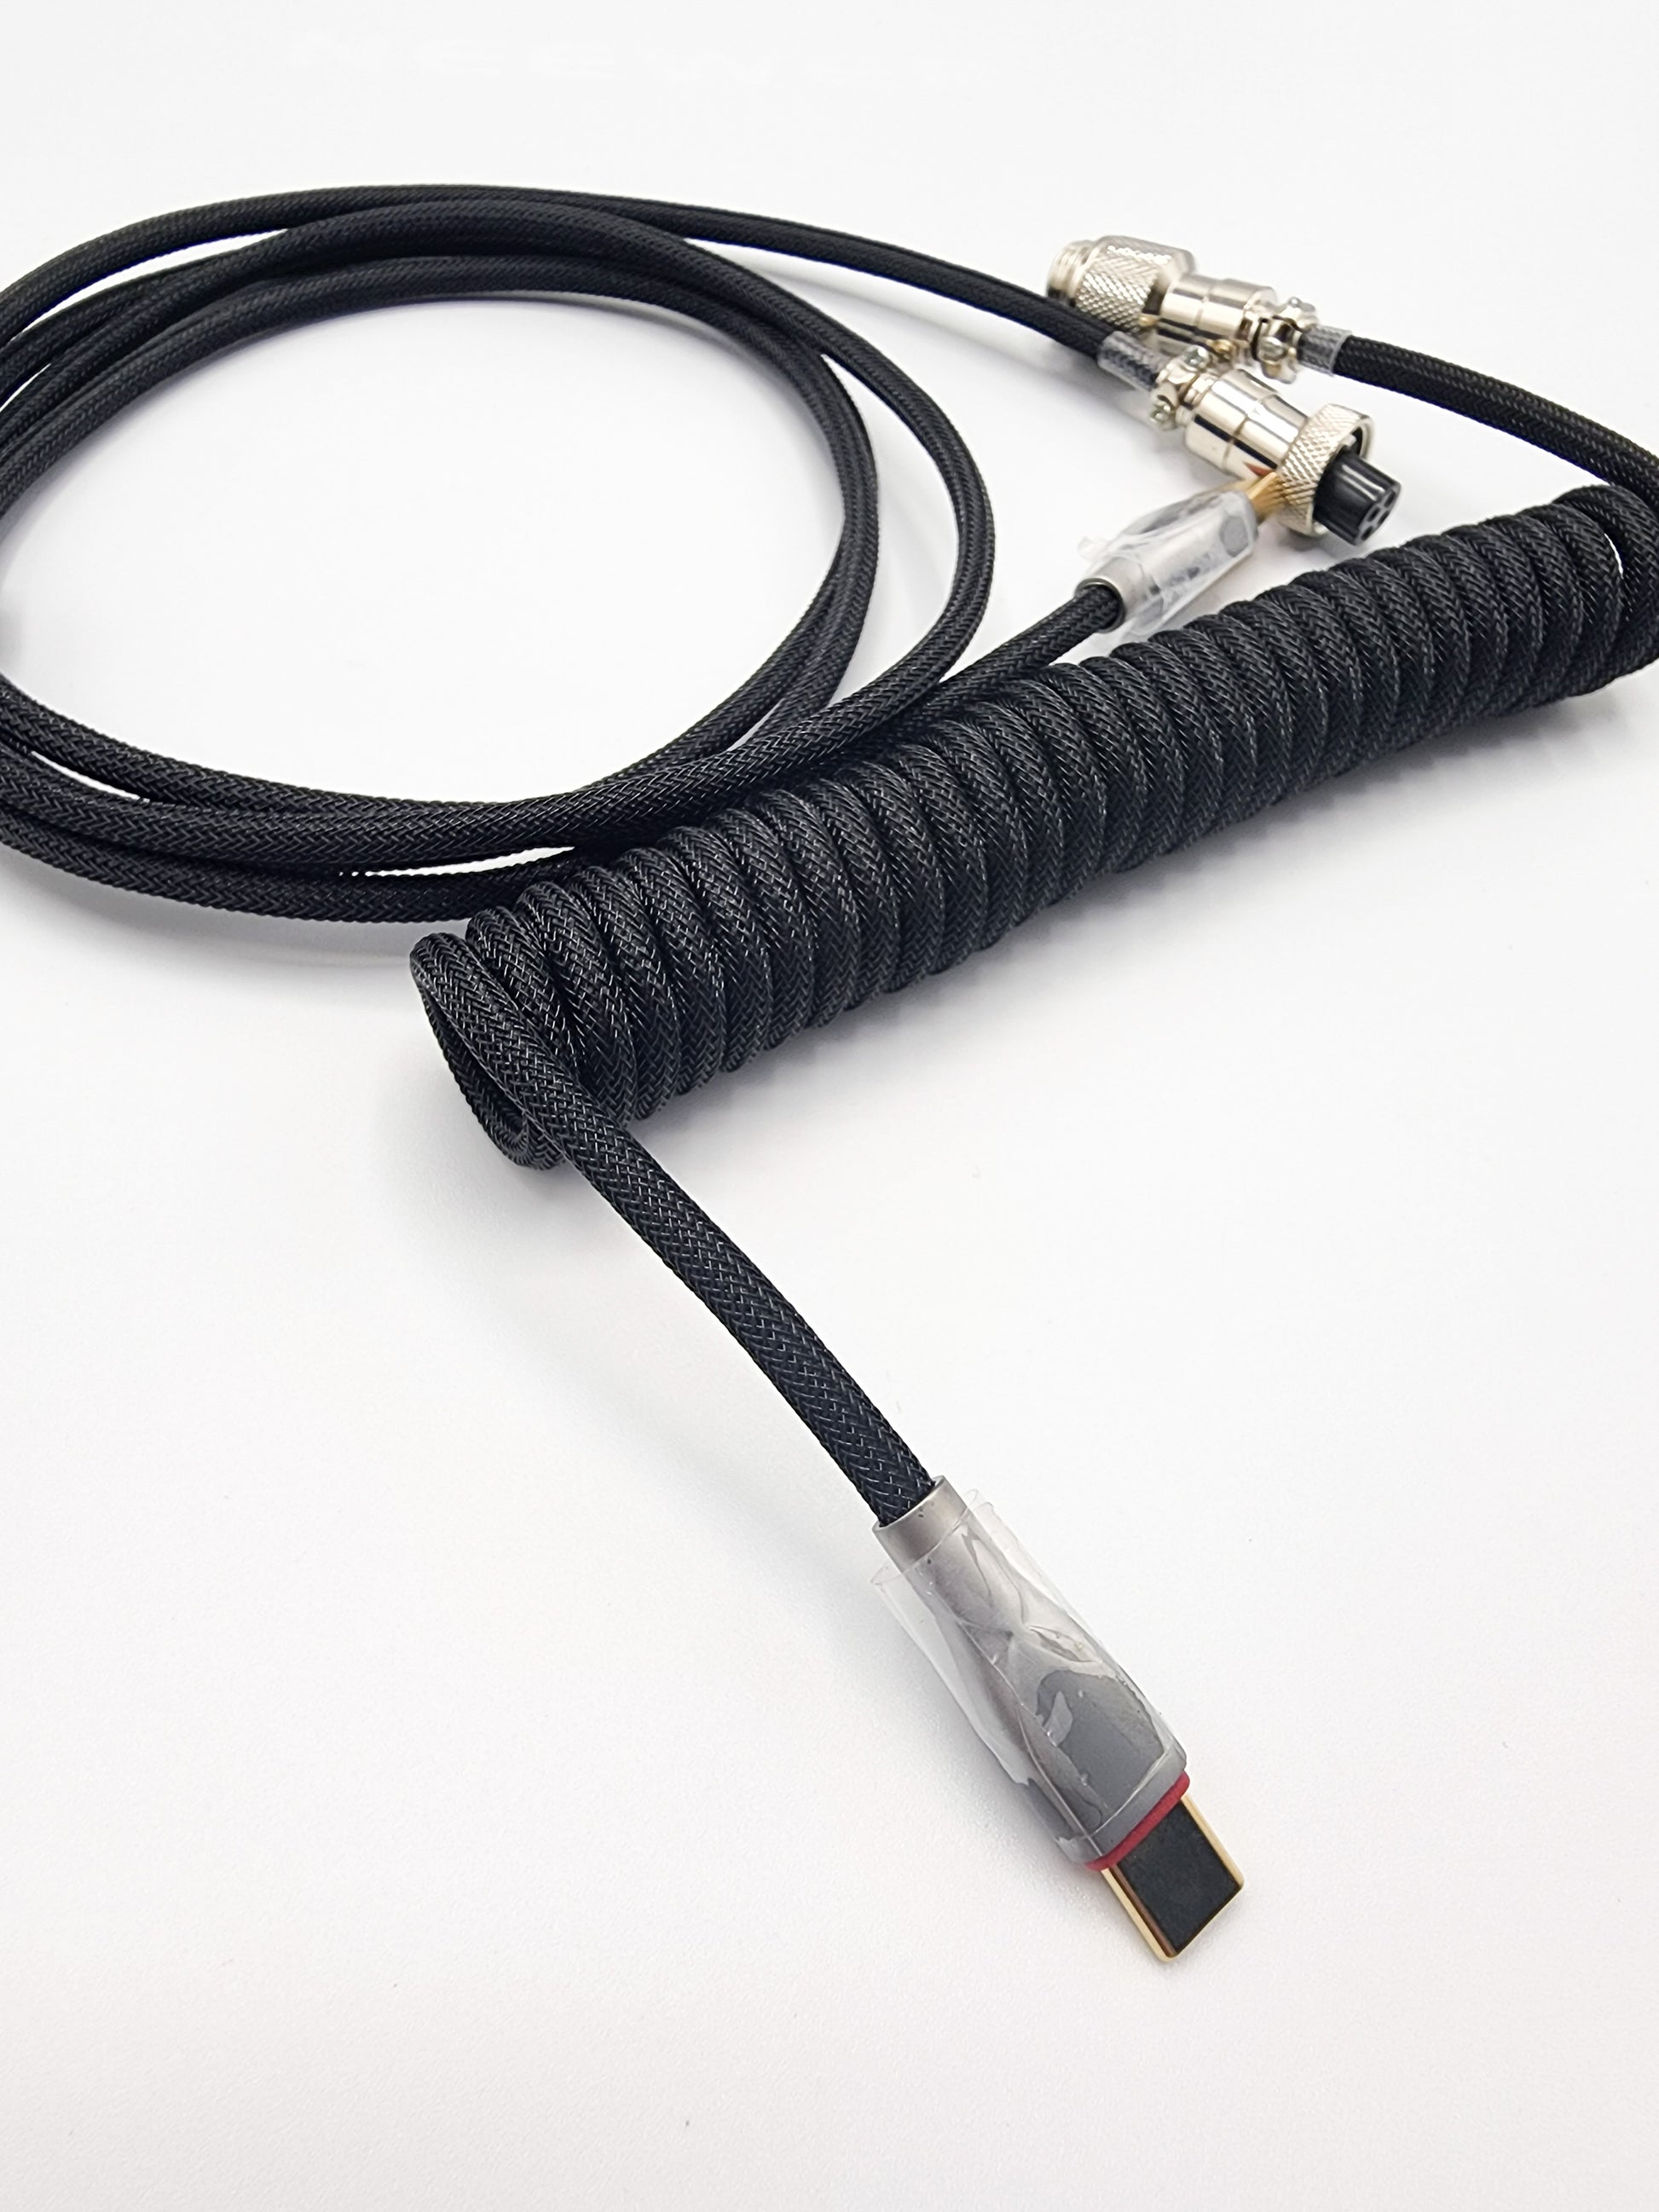 Custom Coiled Aviator Artisan USB-C Cable (White and Black) – Lume